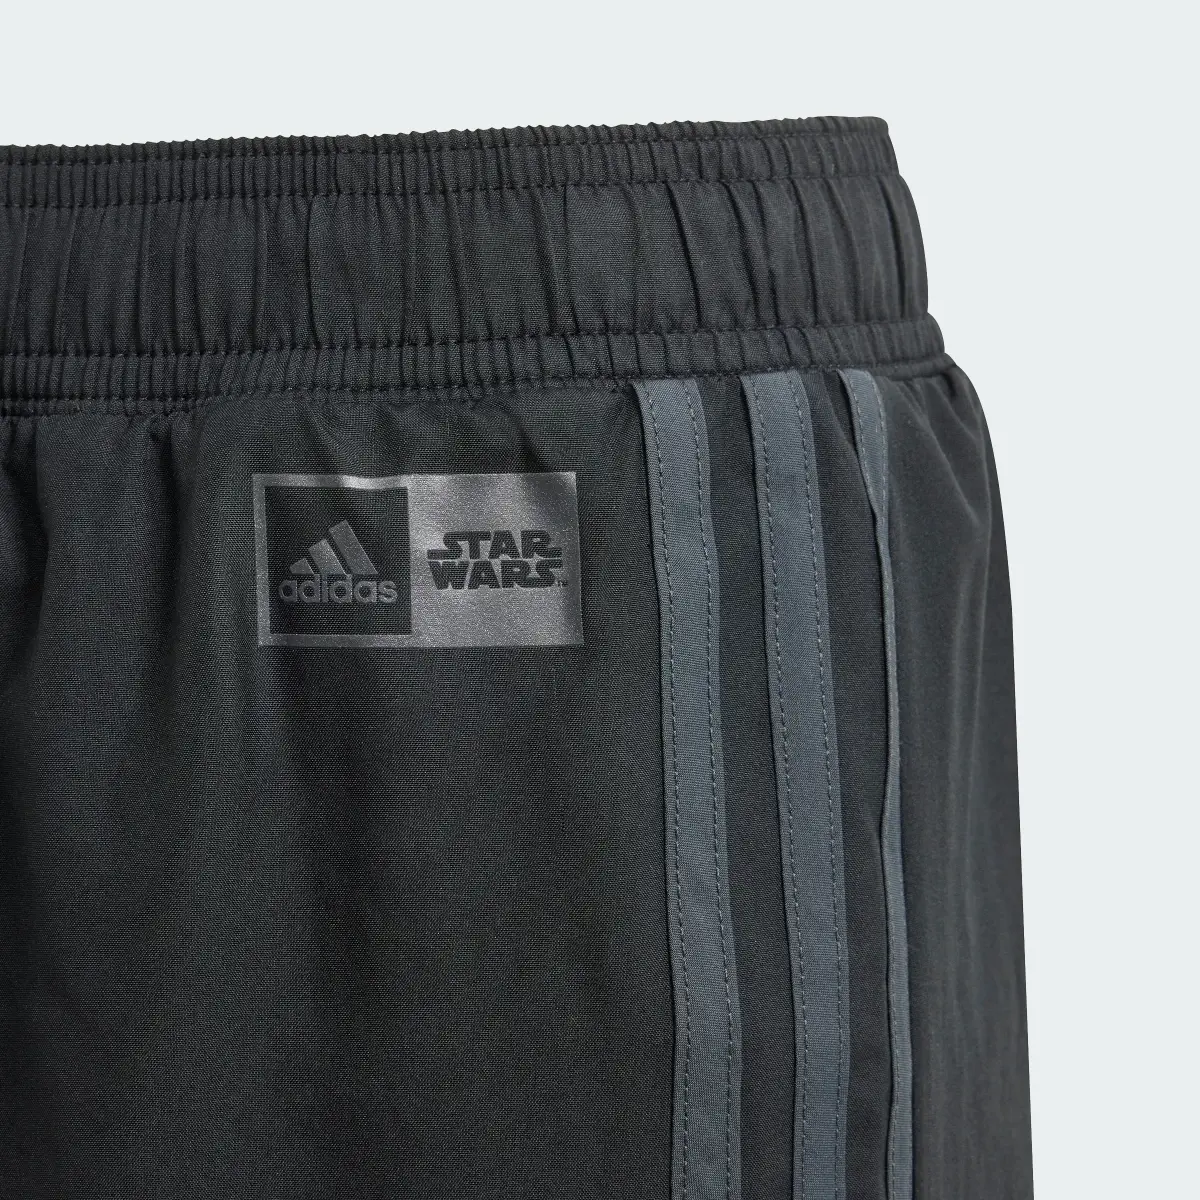 Adidas Short adidas x Star Wars. 3